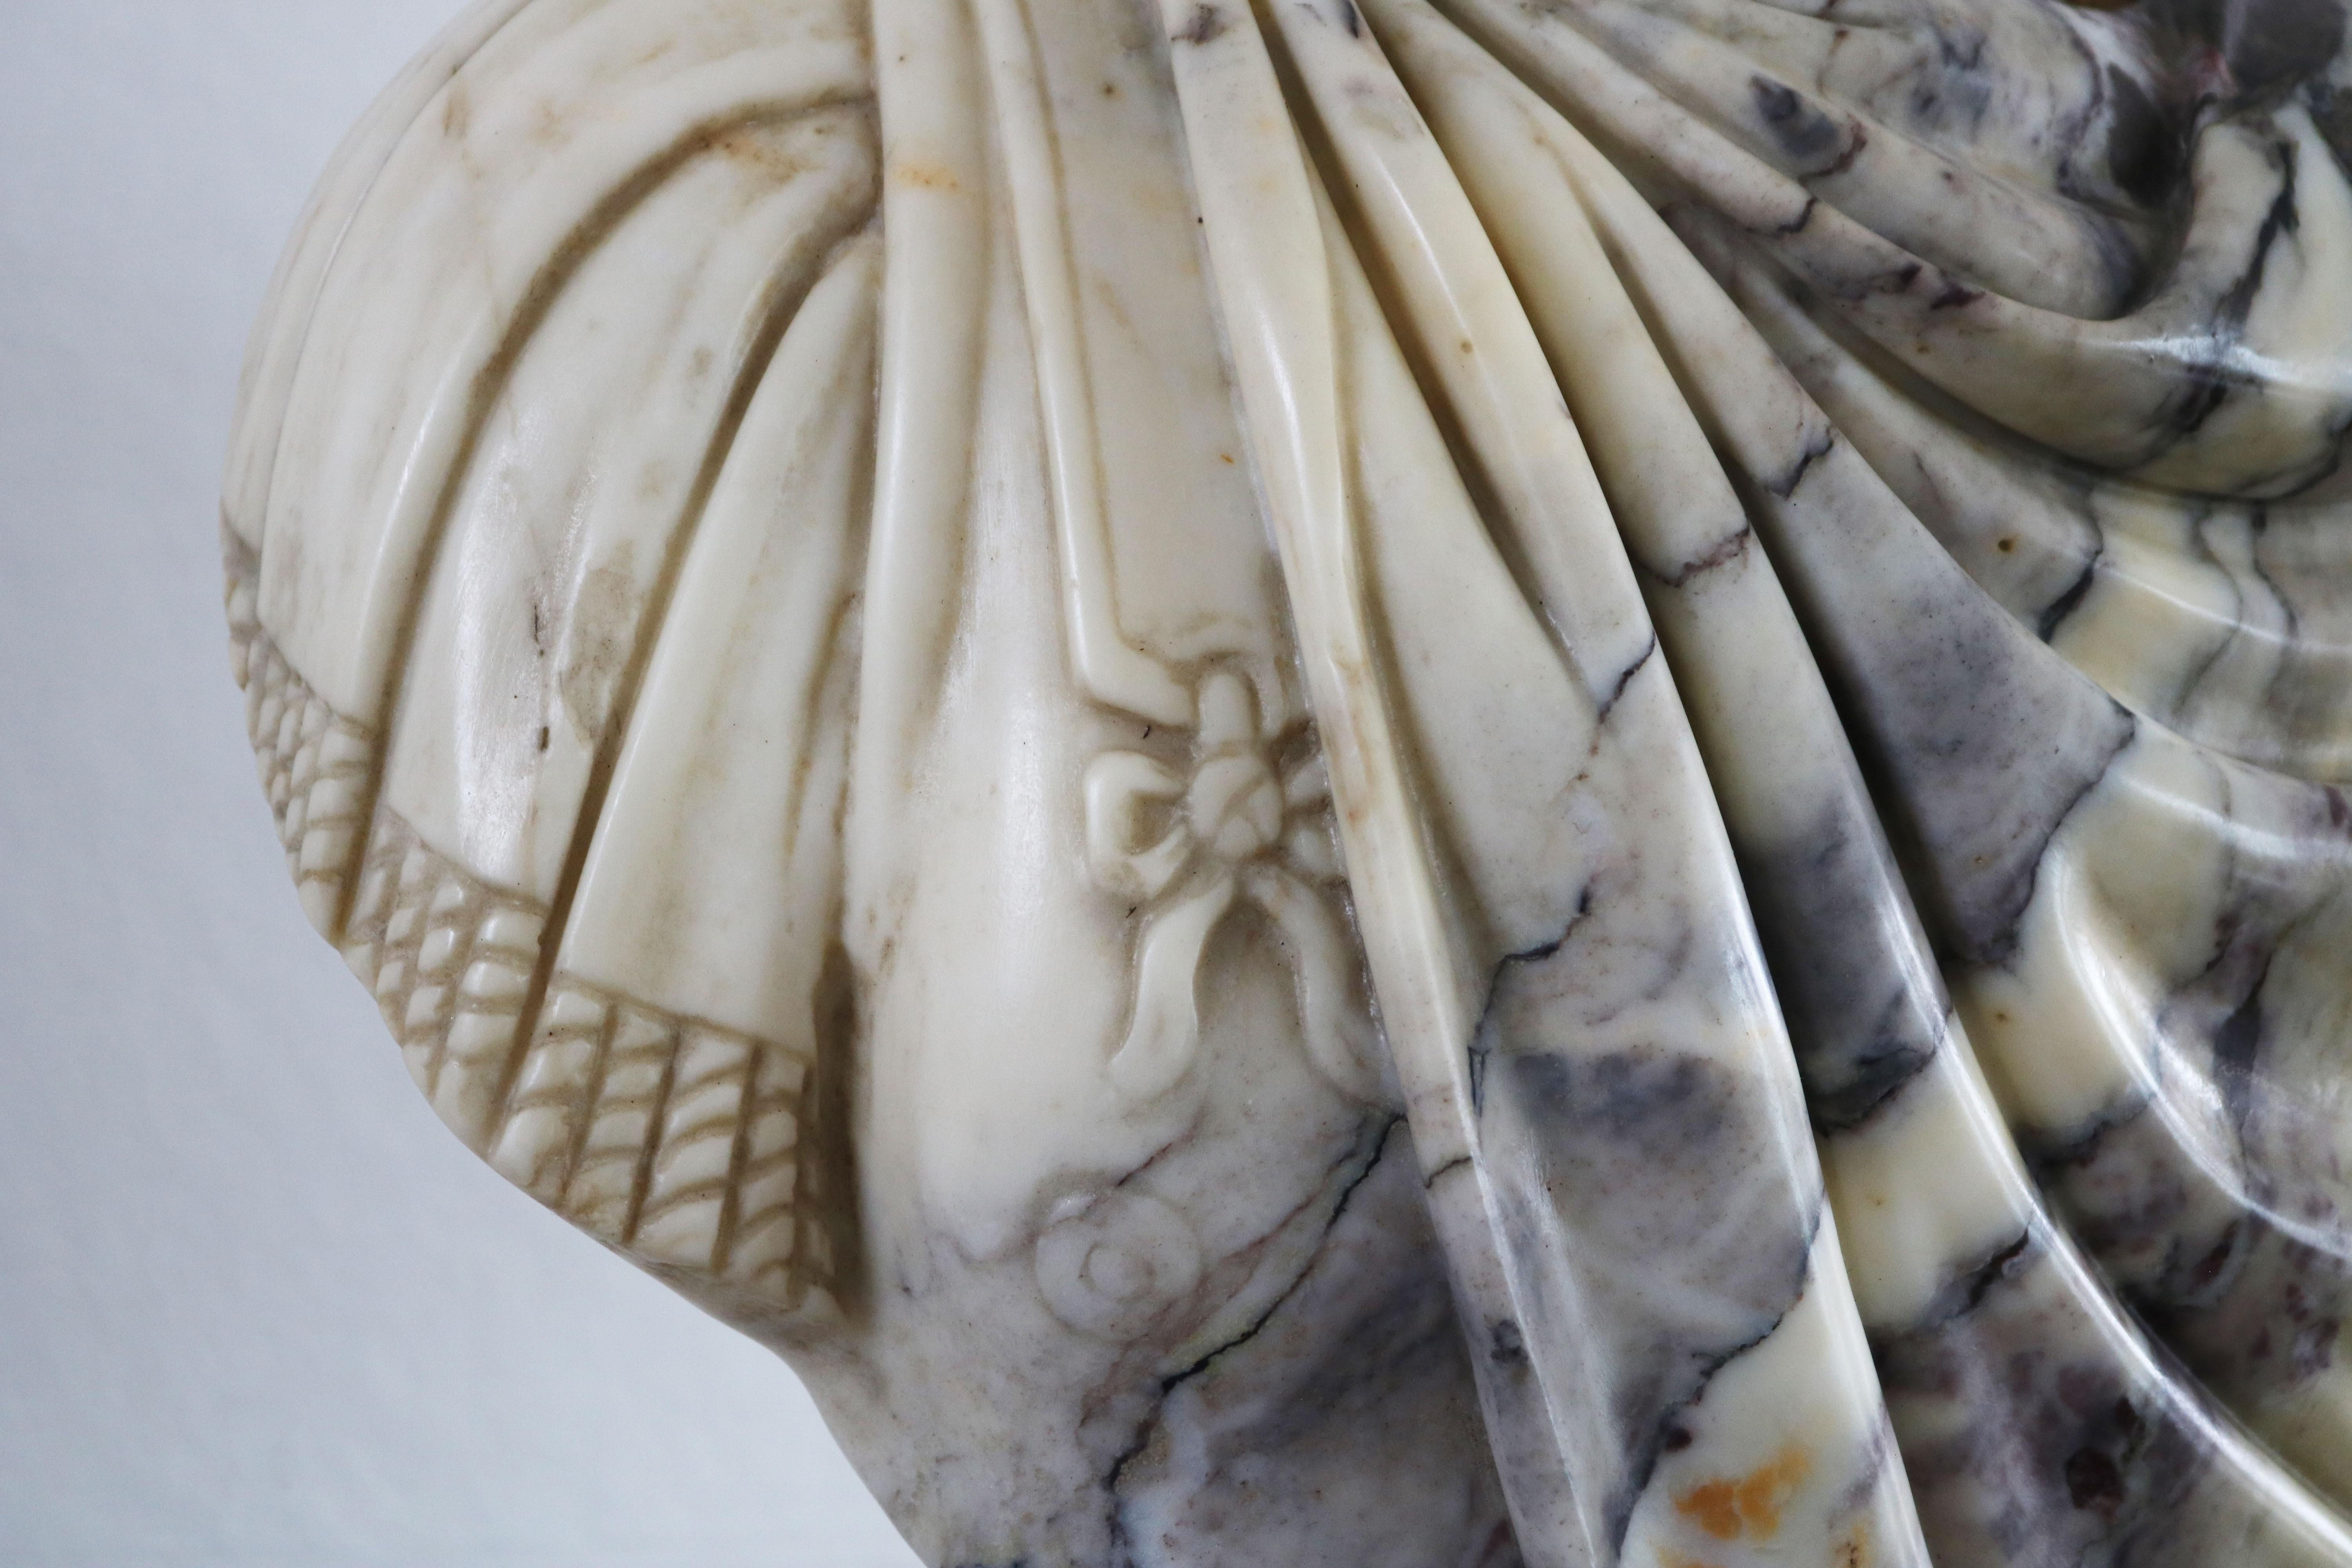 Renaissance Revival Italian Marble Bust Vanitas / Memento Mori 19th Century Carved Sculpture Italy